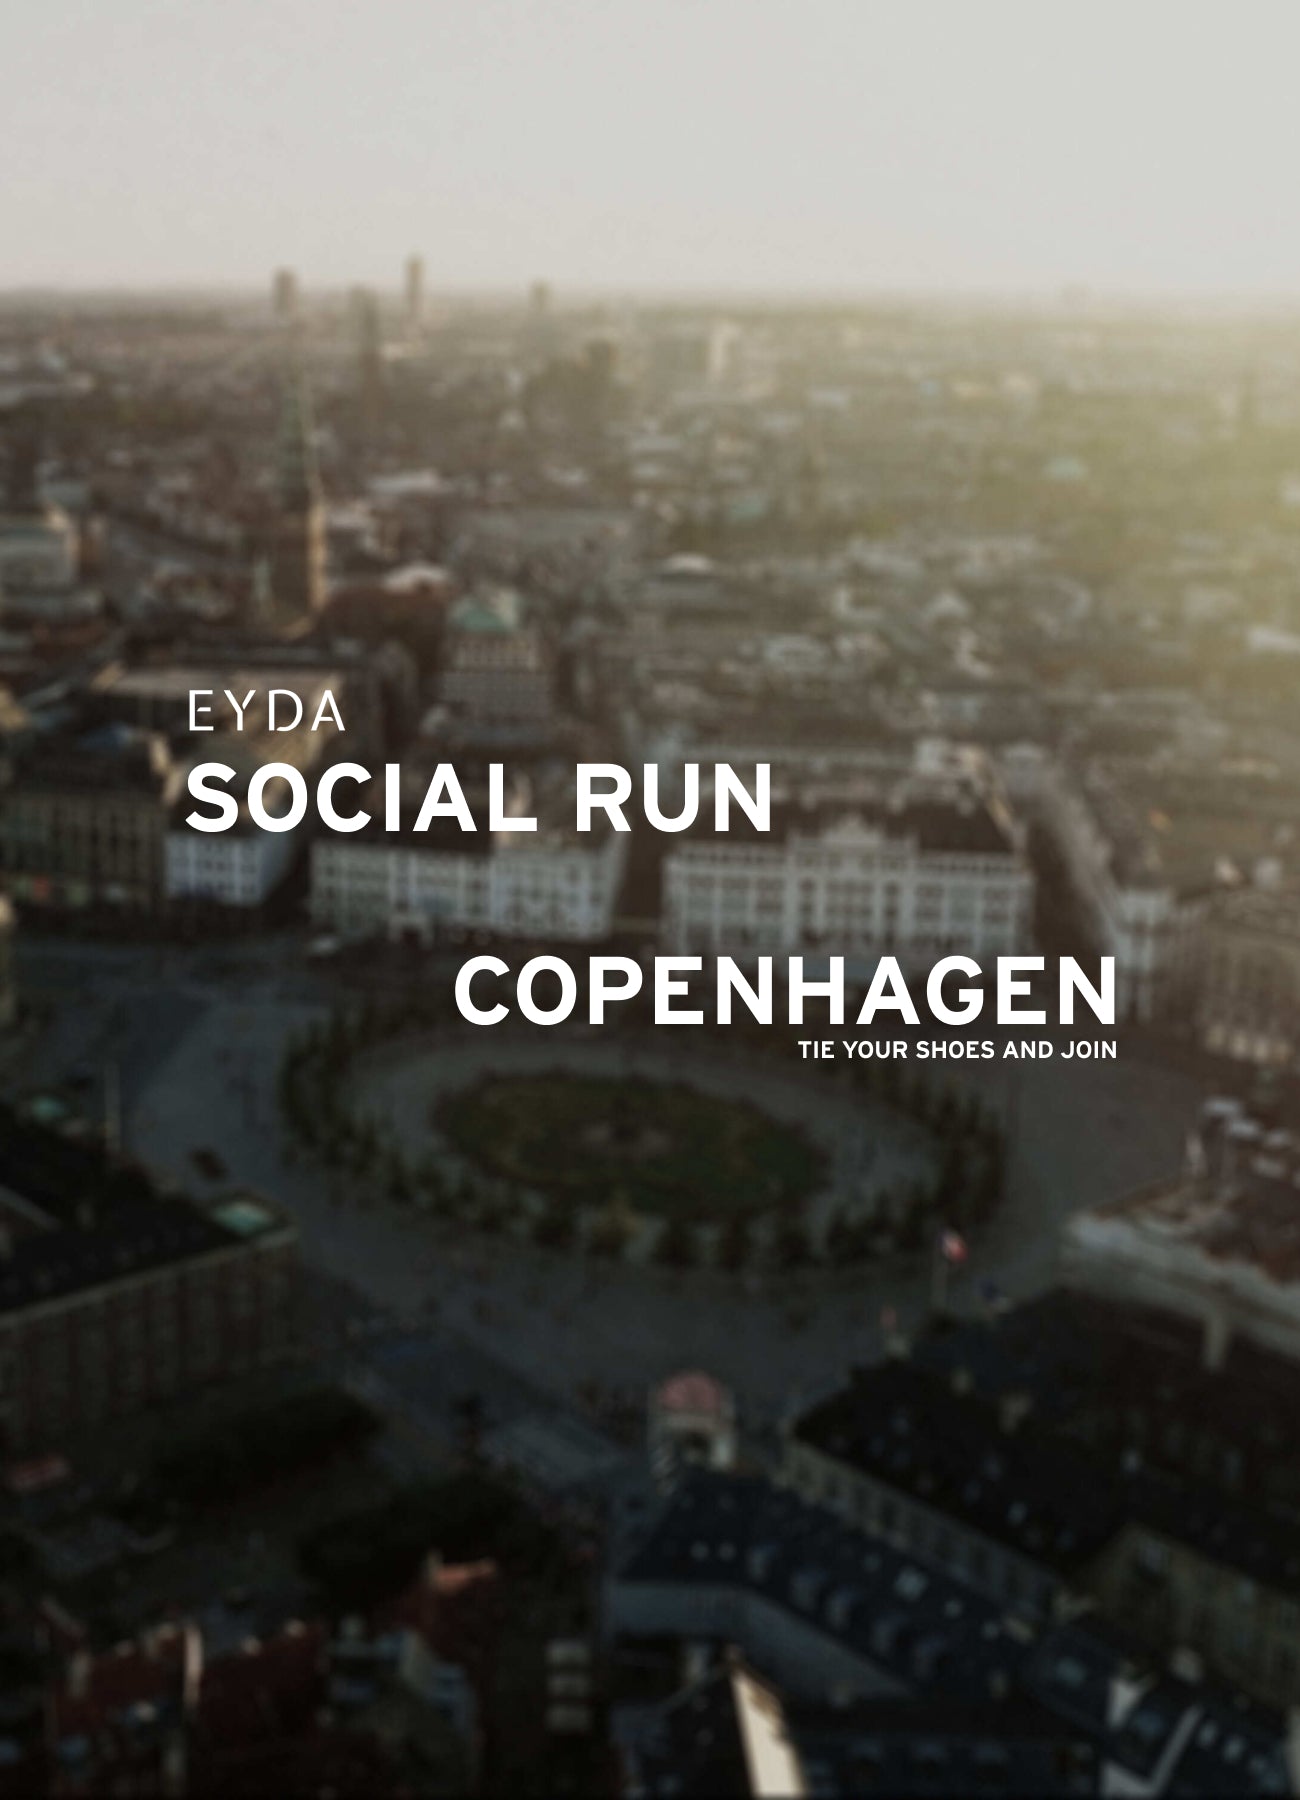 EYDA Social Run Copenhagen